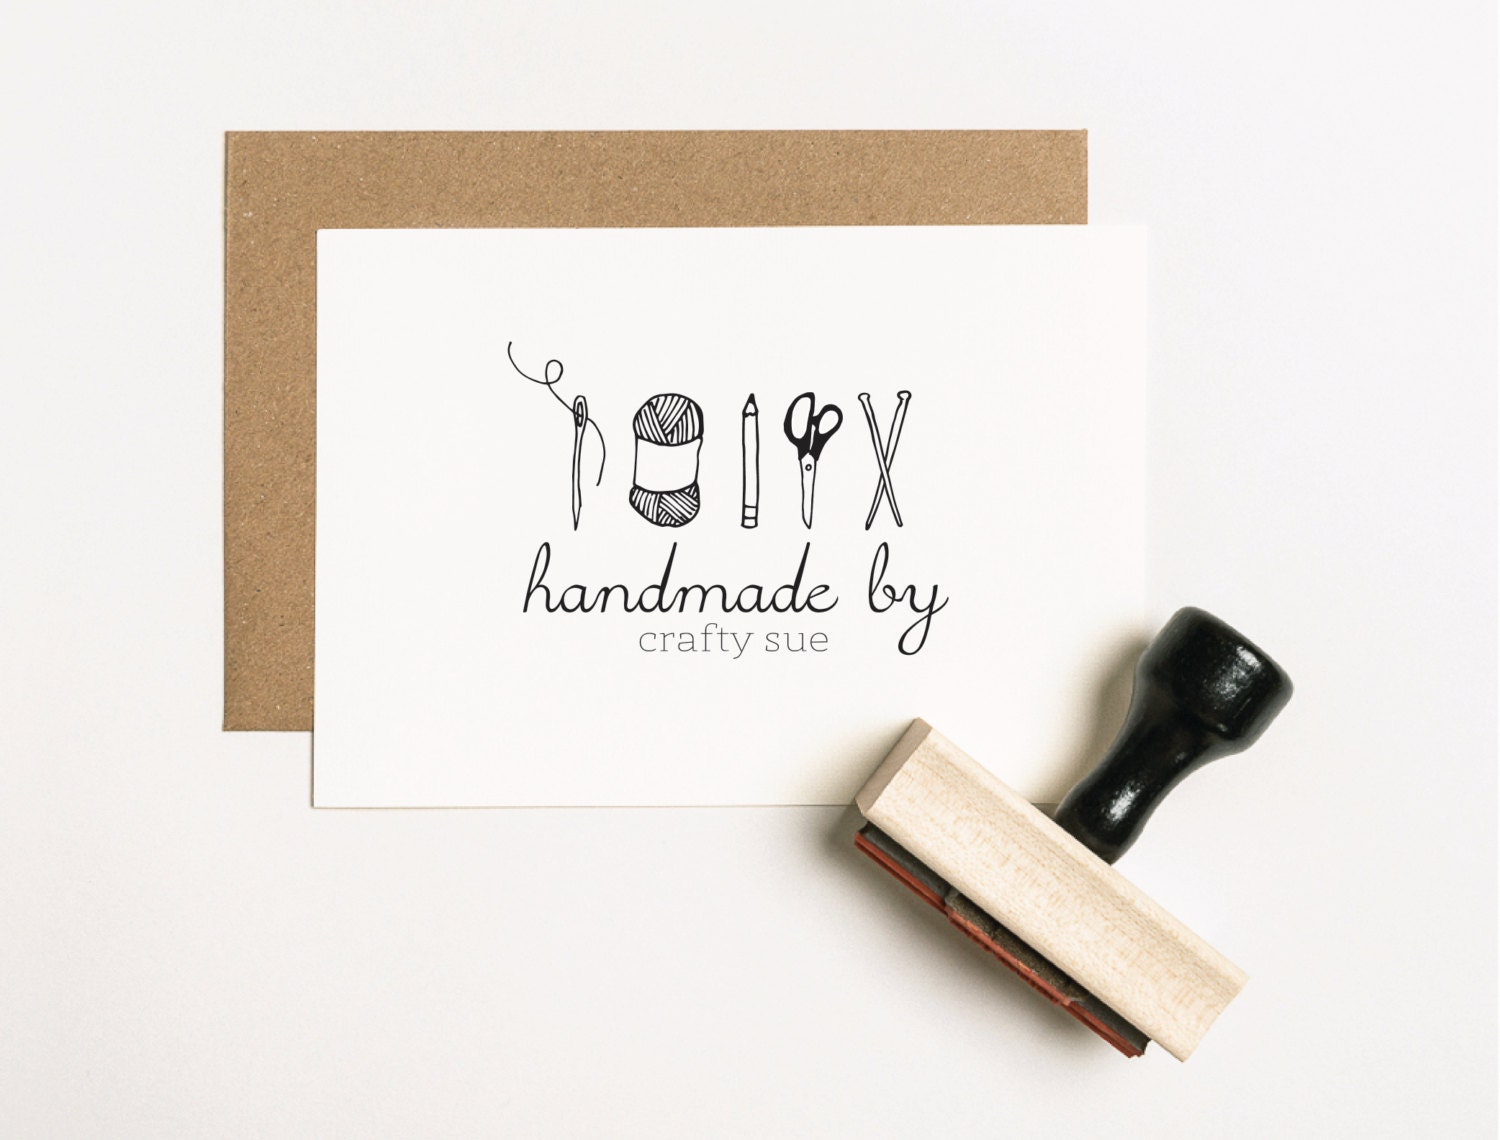 Best Of 100 Handmade Card Company Names